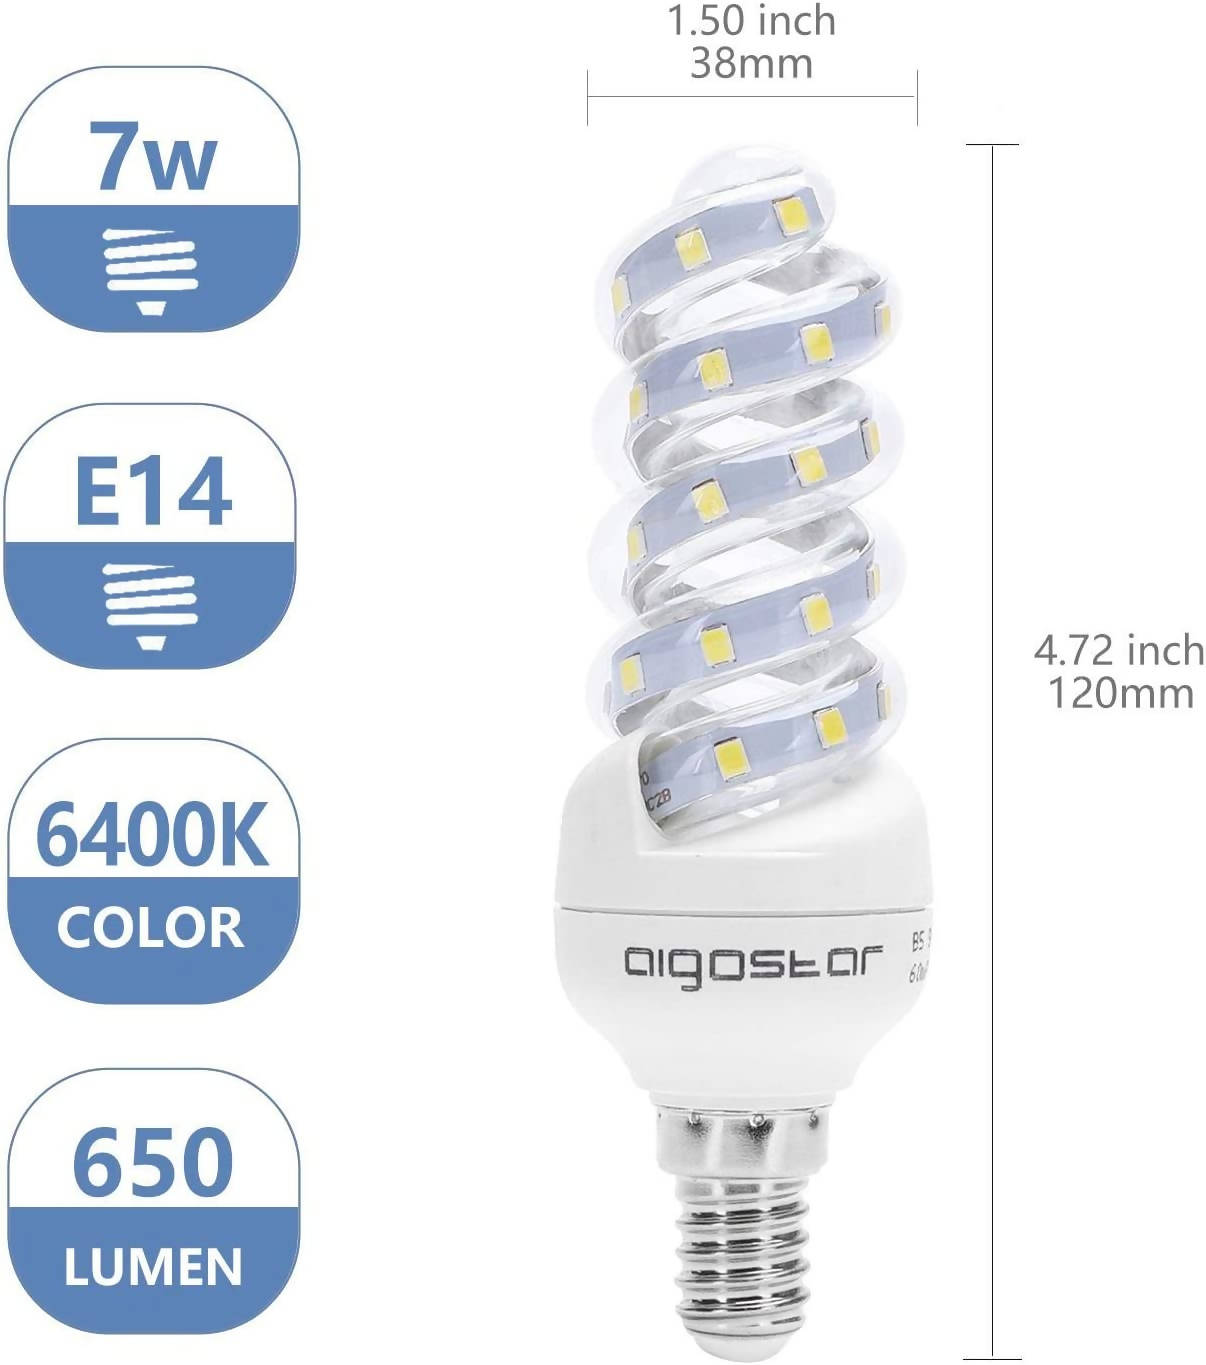 LED B5 Spiral 7 W, Cold White, E14[Energy Class A+]